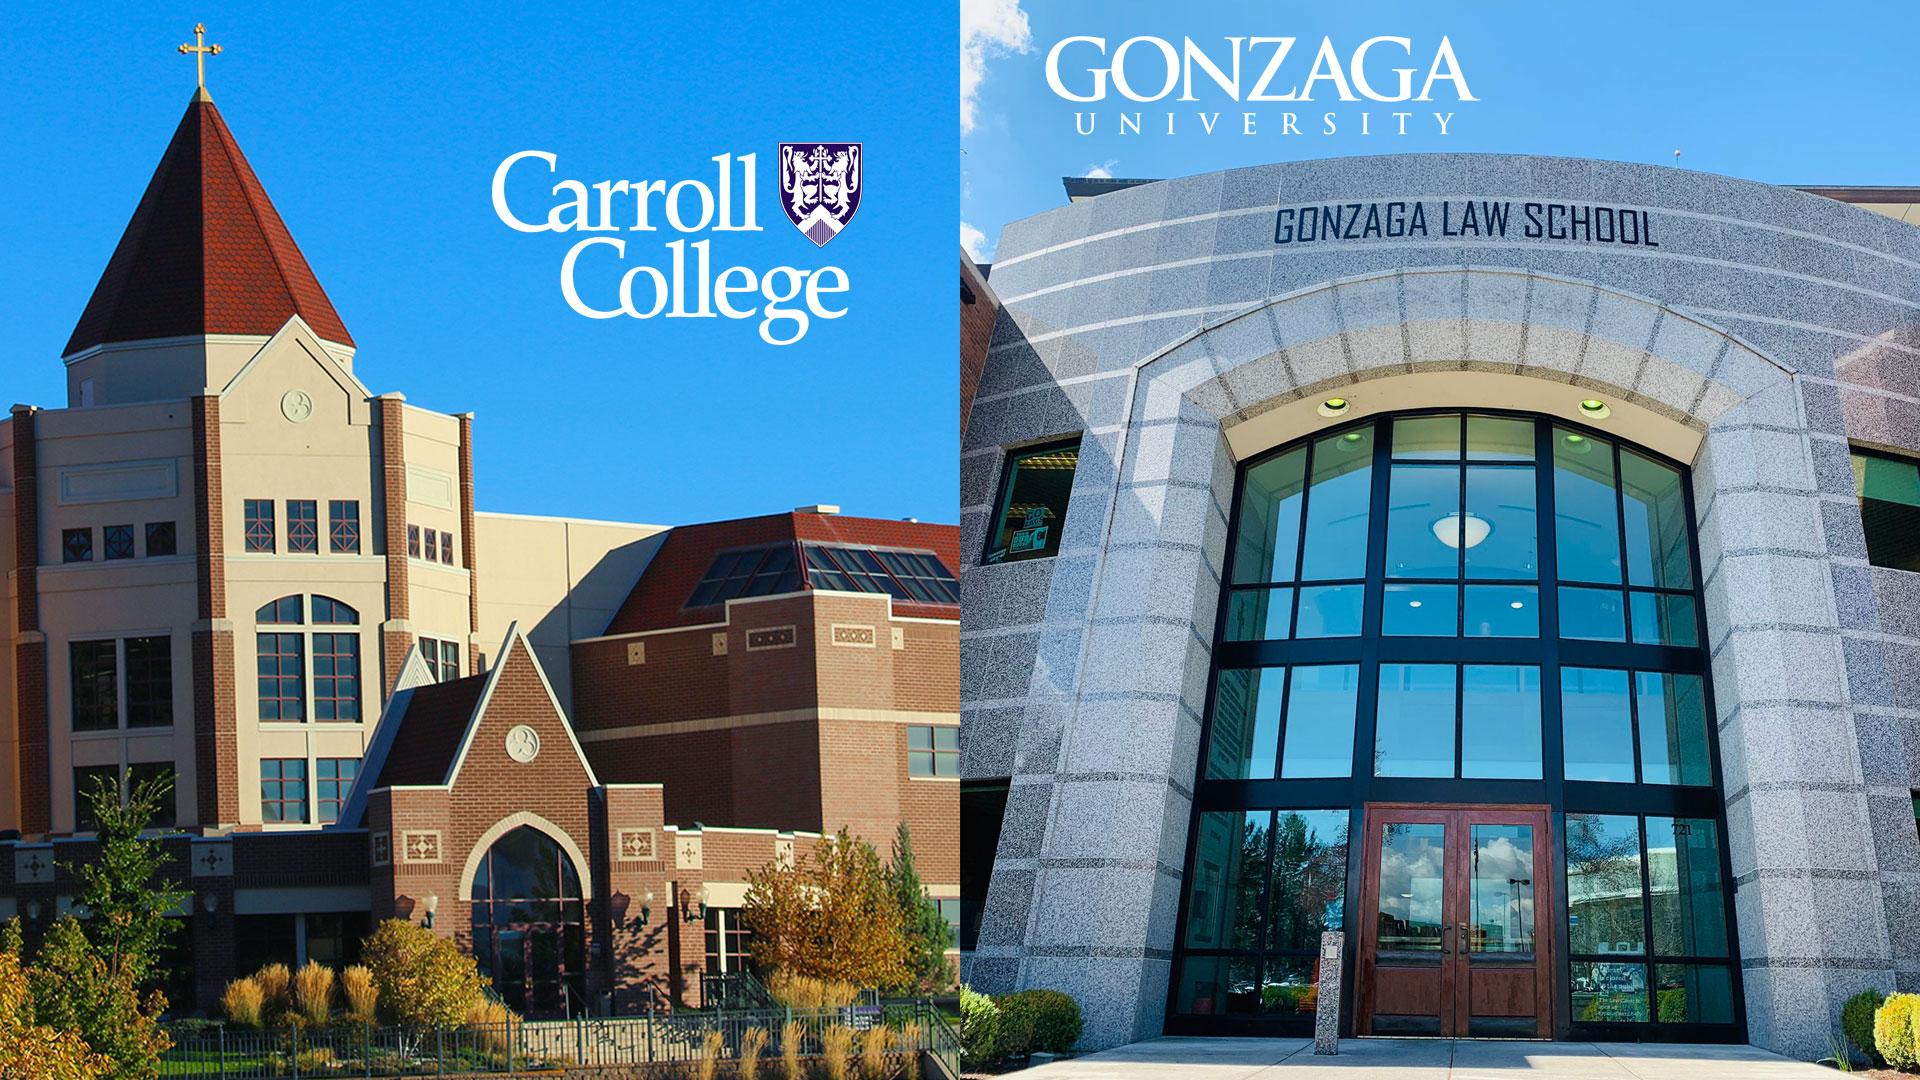 Carroll College and Gonzaga University